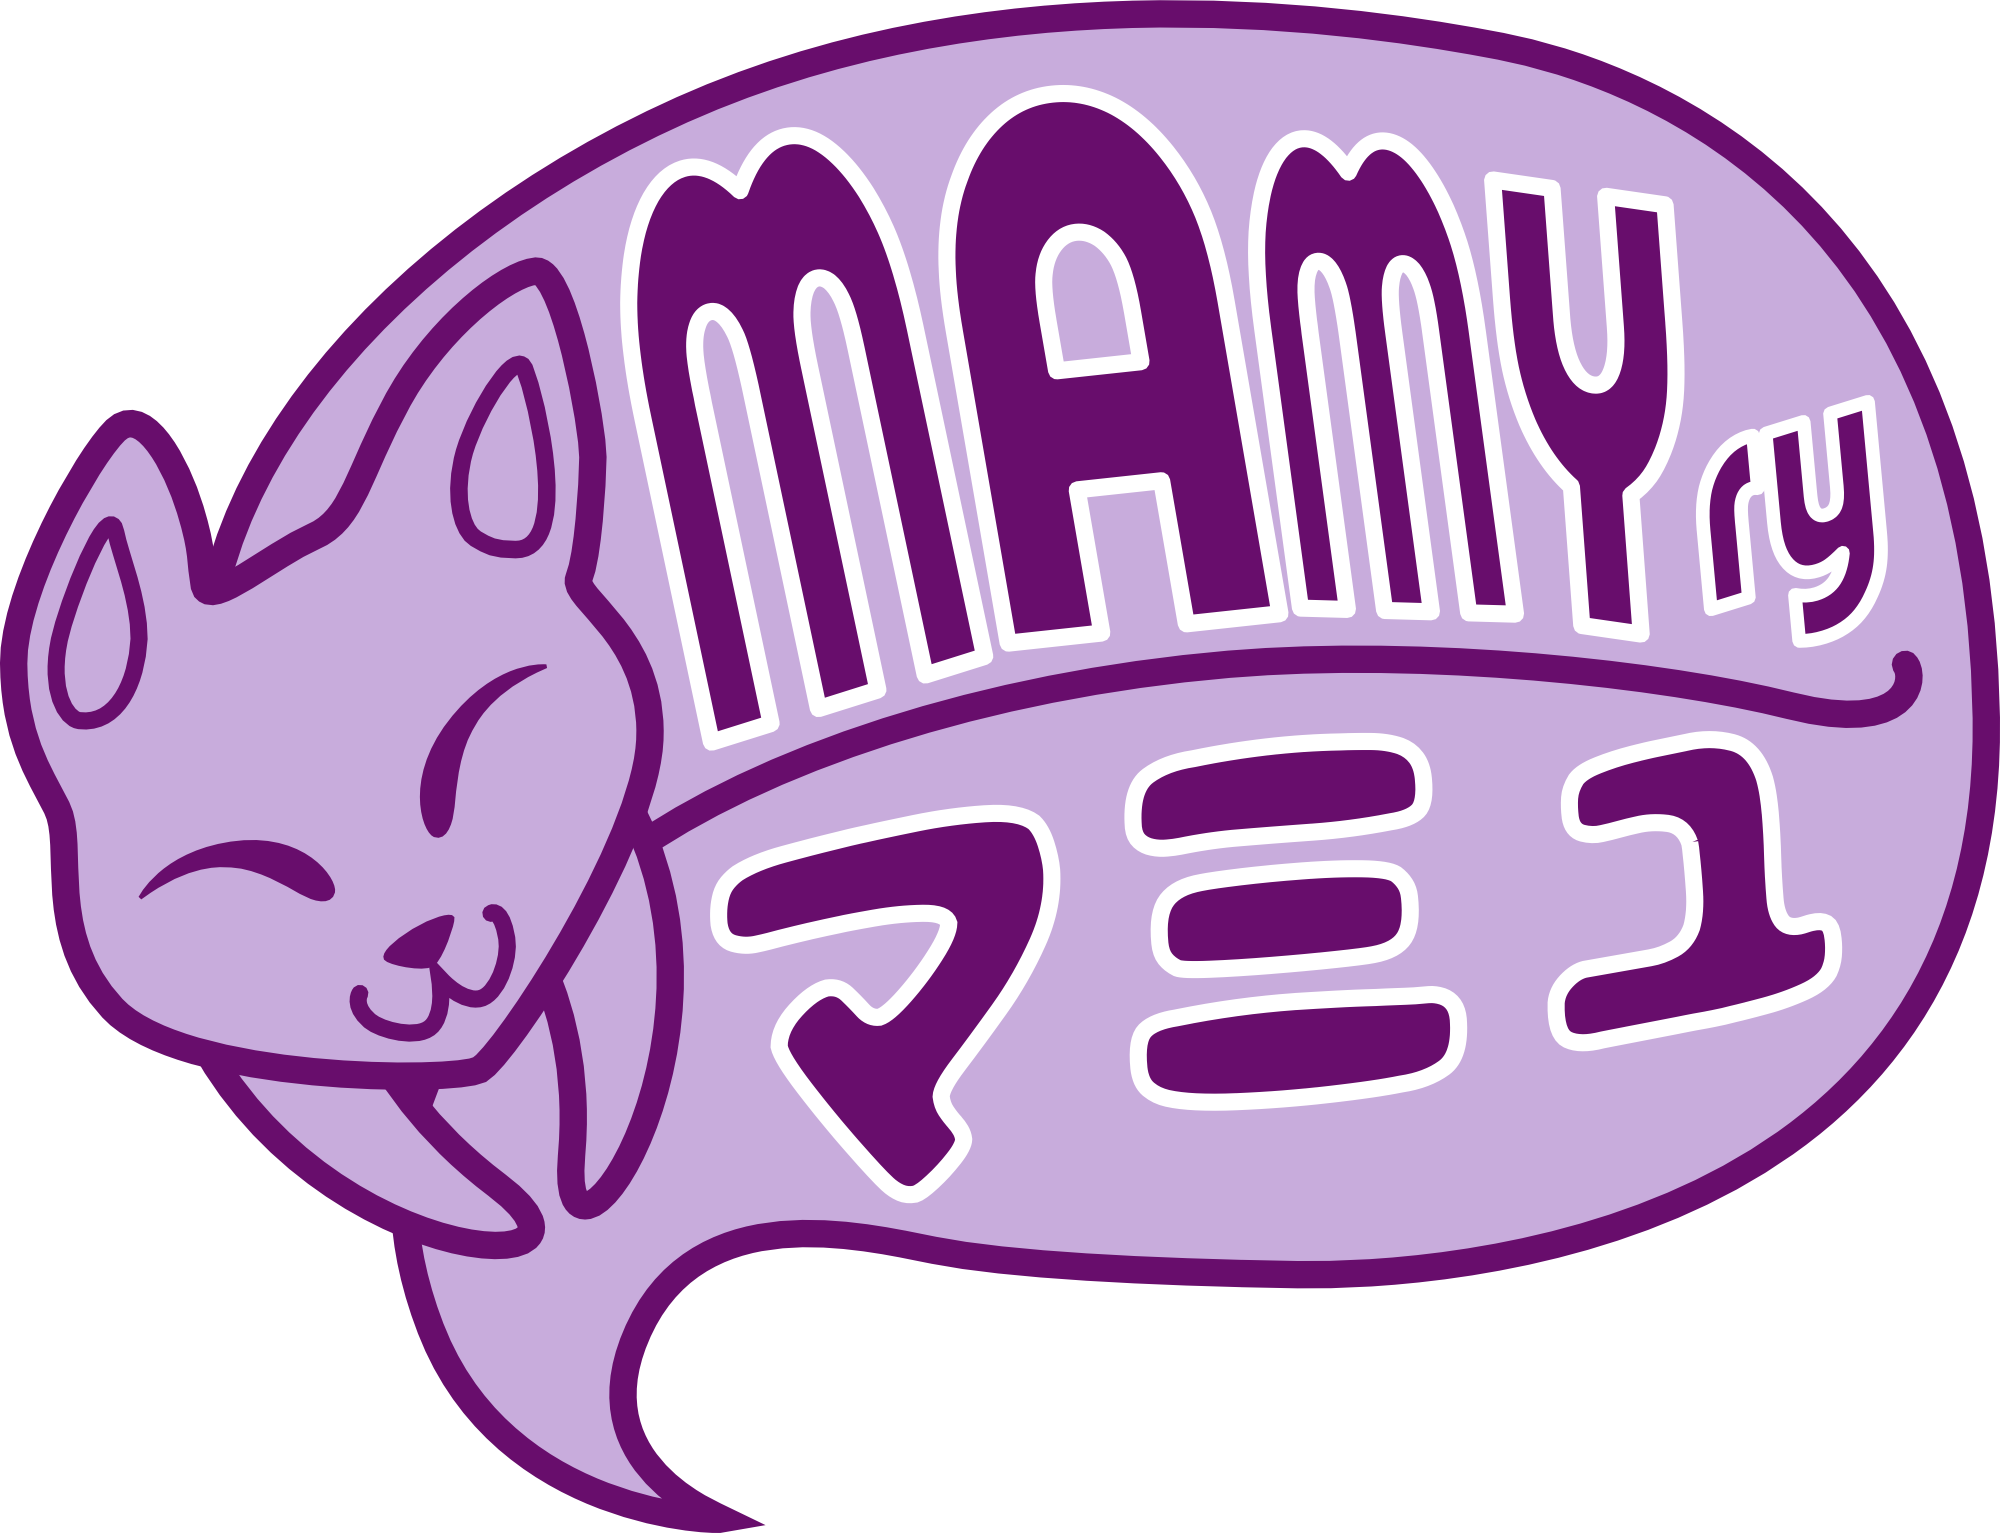 MAMY ry logo